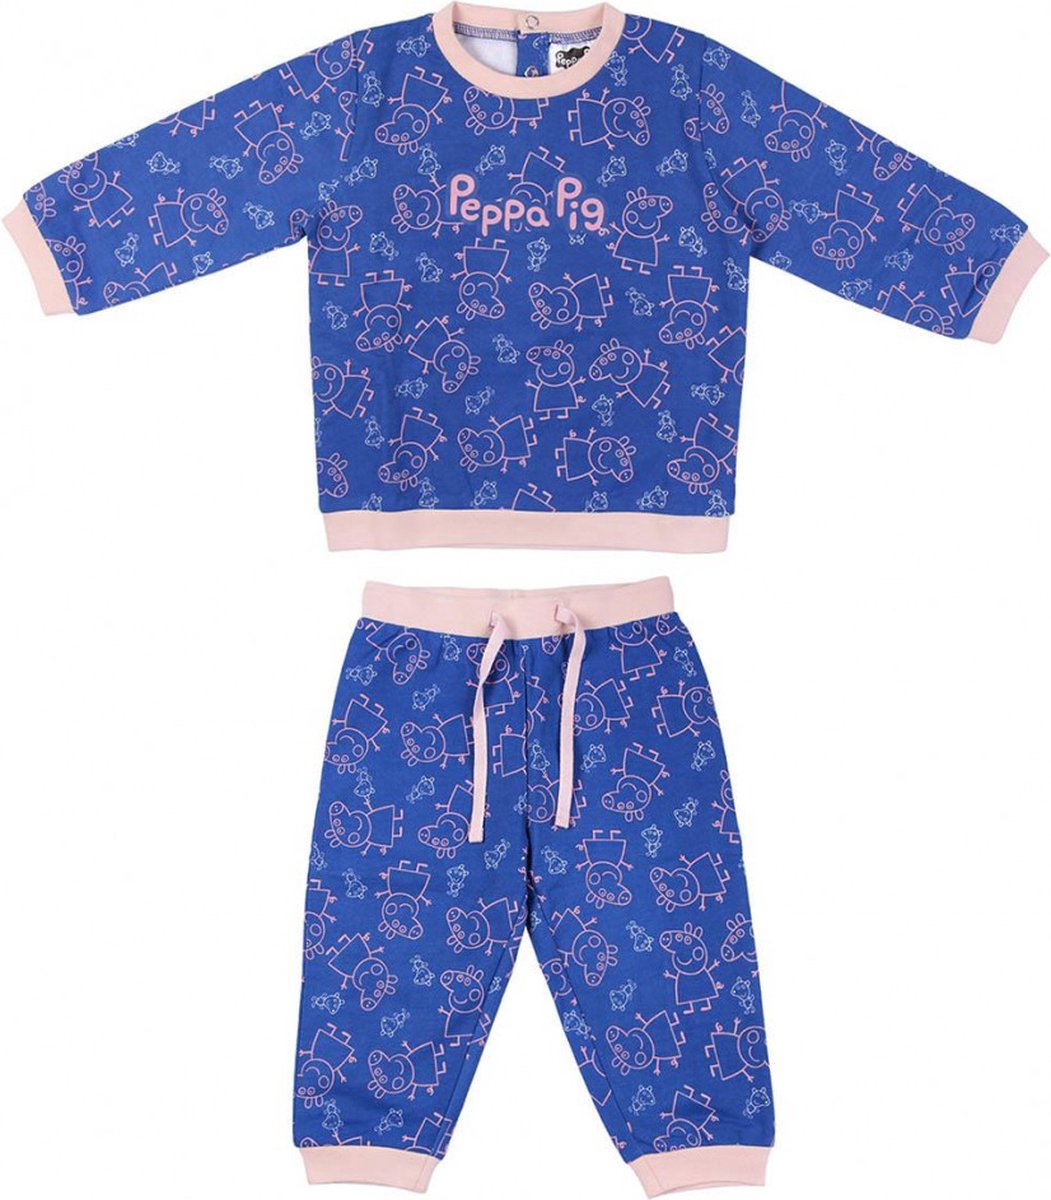 Original Peppa Pig trainingspak newborn kledingset - baby kids - maat 74 cm - 12 maanden - katoen set broekje trui Premium